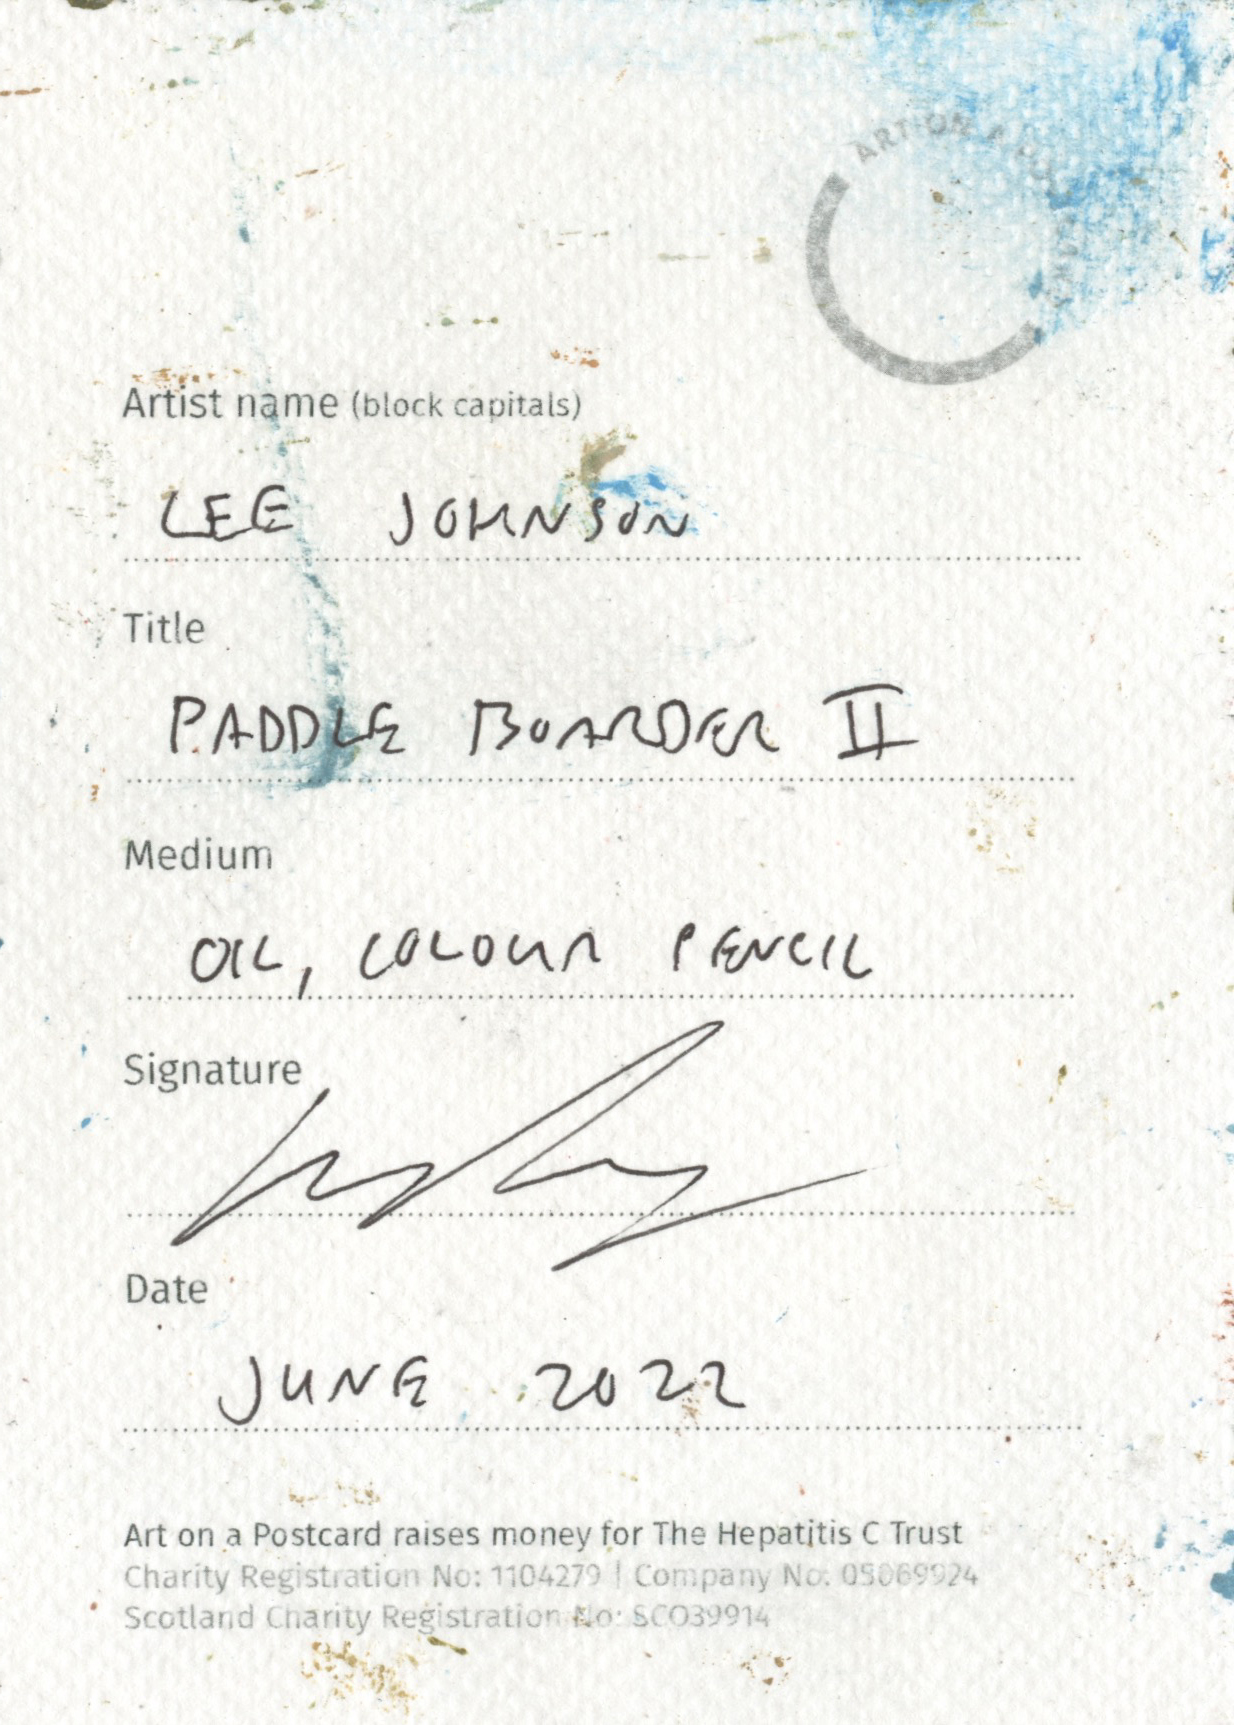 12. Lee Johnson - Paddle Boarder II - BACK